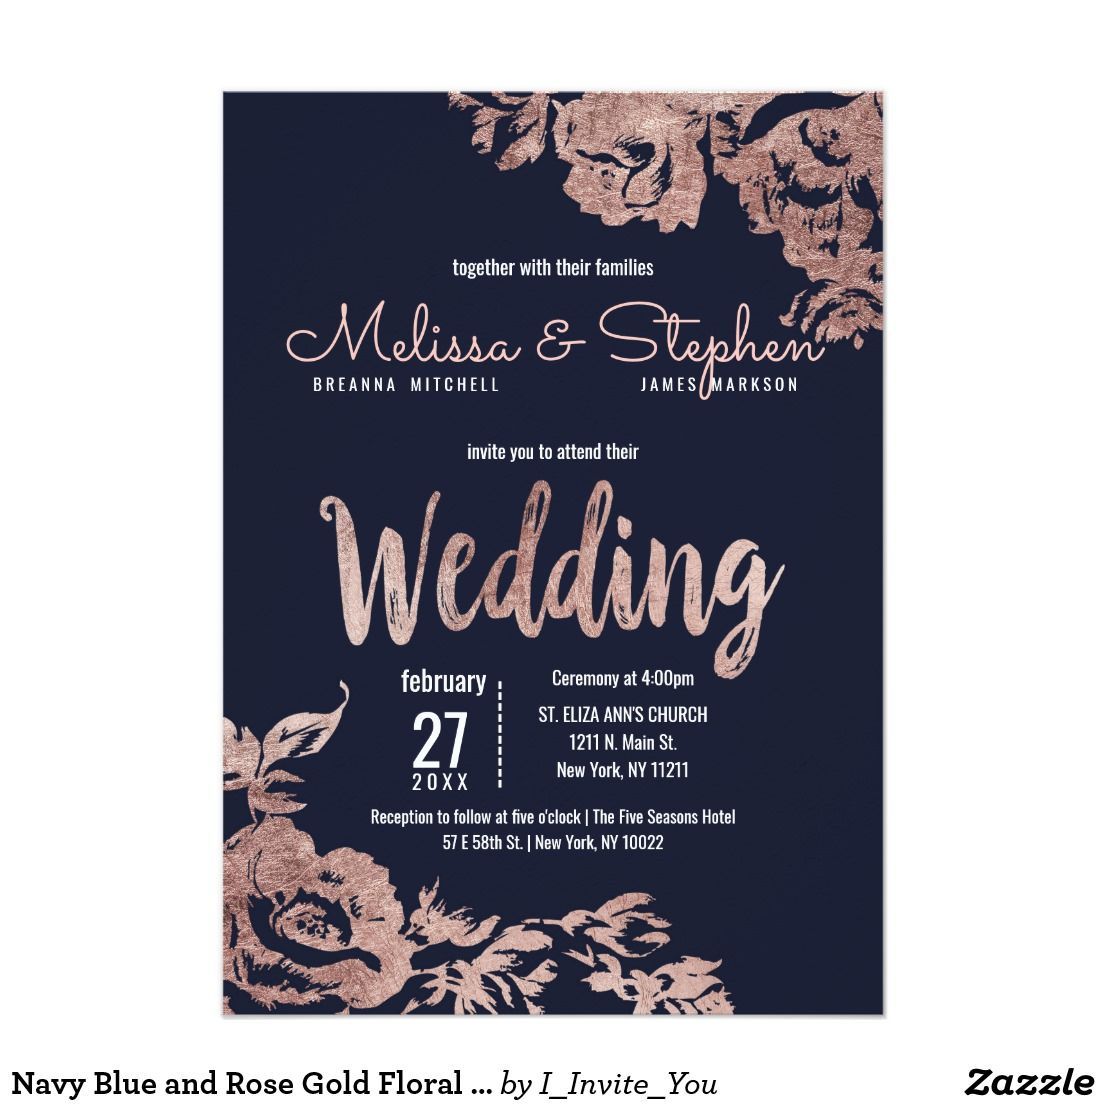 Navy Blue and Rose Gold Floral Wedding Invitation | Zazzle.com -   11 muslim wedding Card ideas